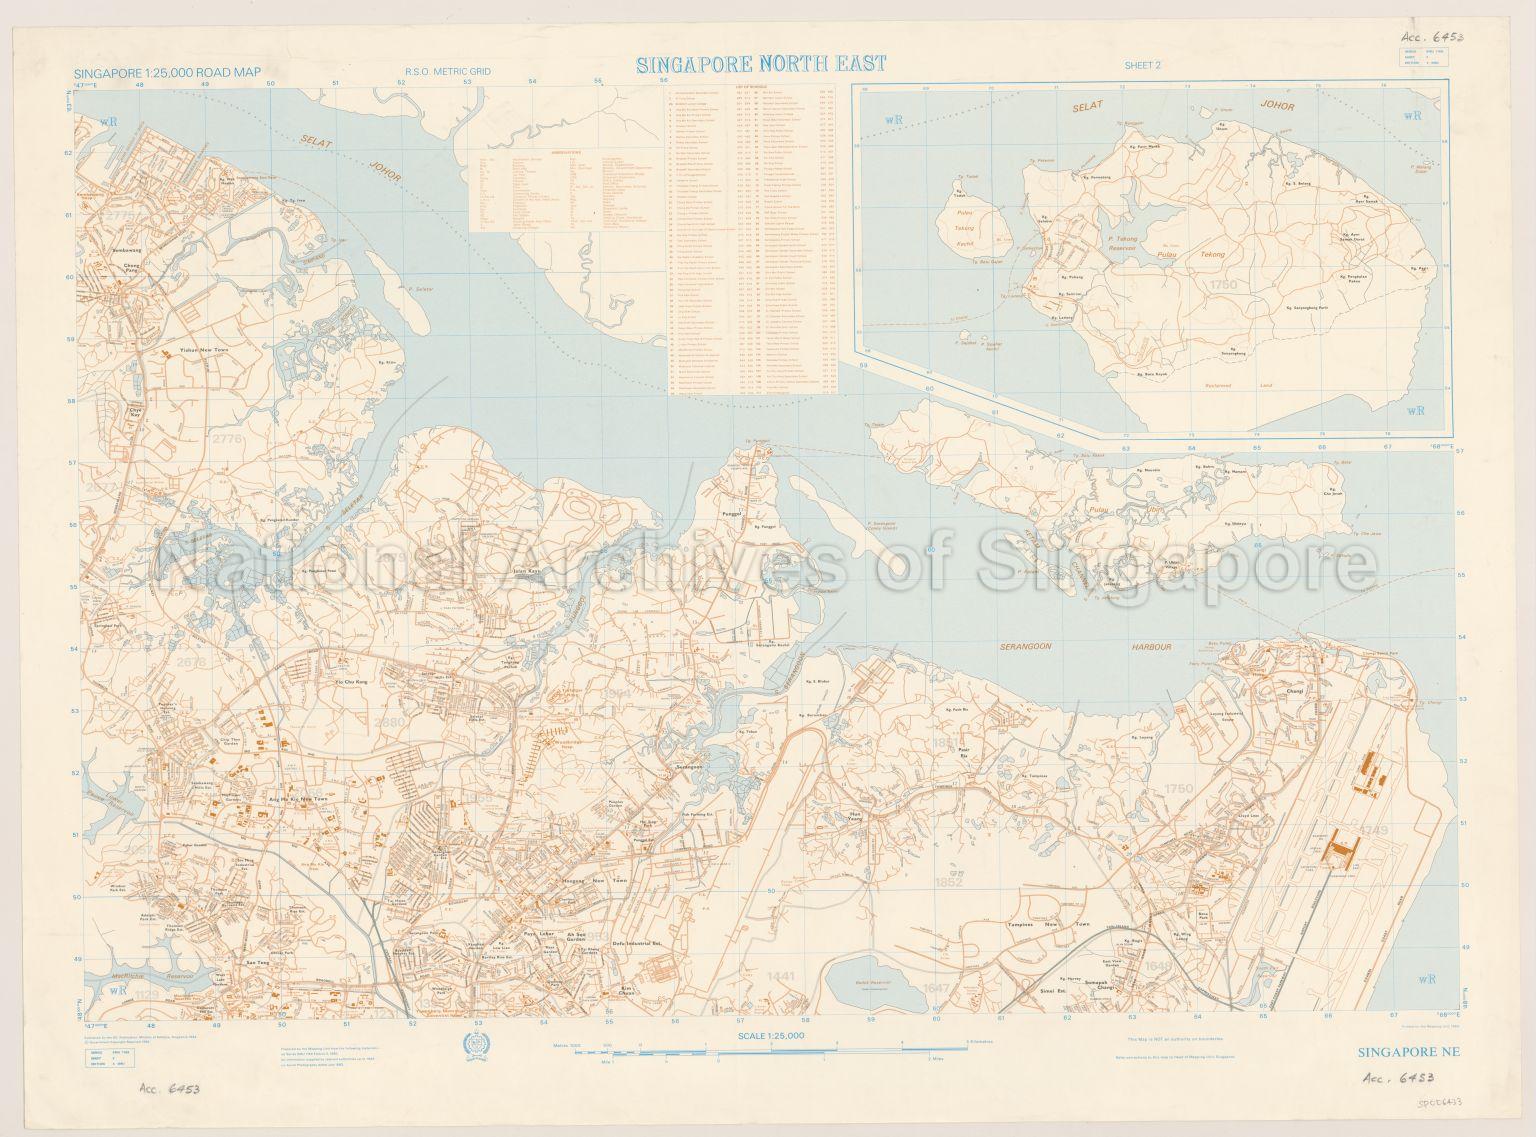 Singapore Road Map. Singapore North East Sheet 2